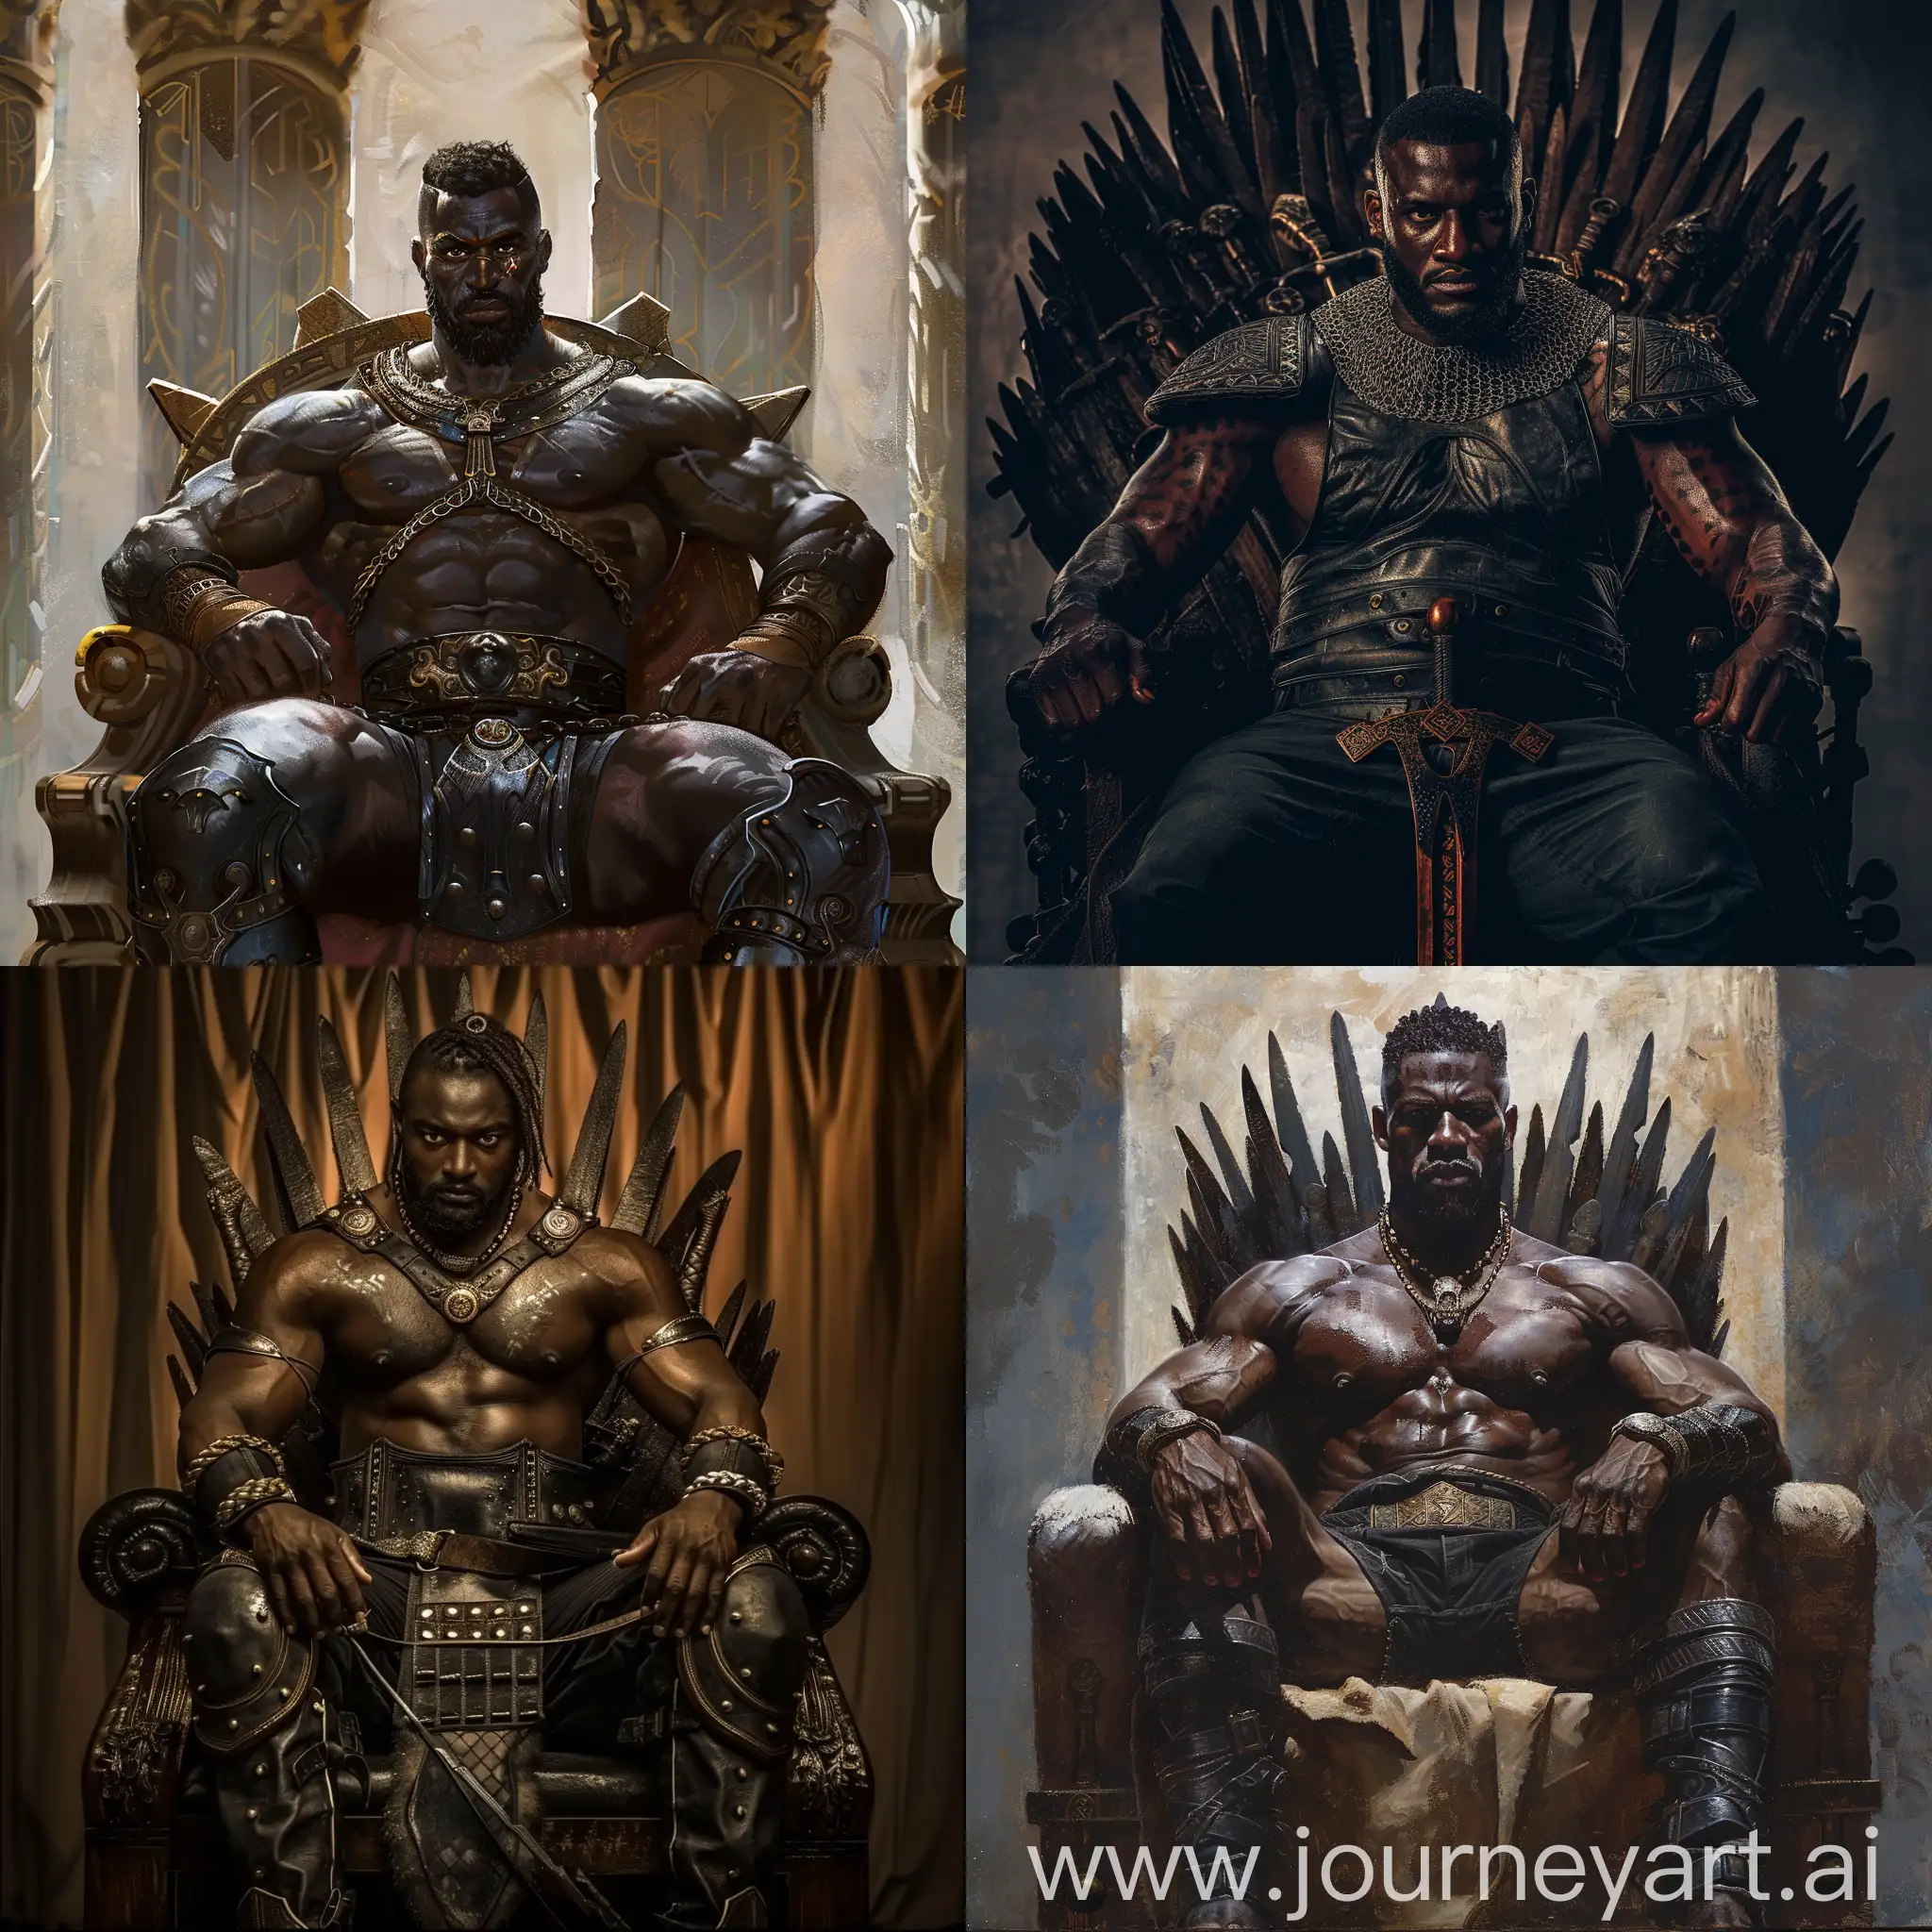 Musclar black man warrior type sitting on the throne